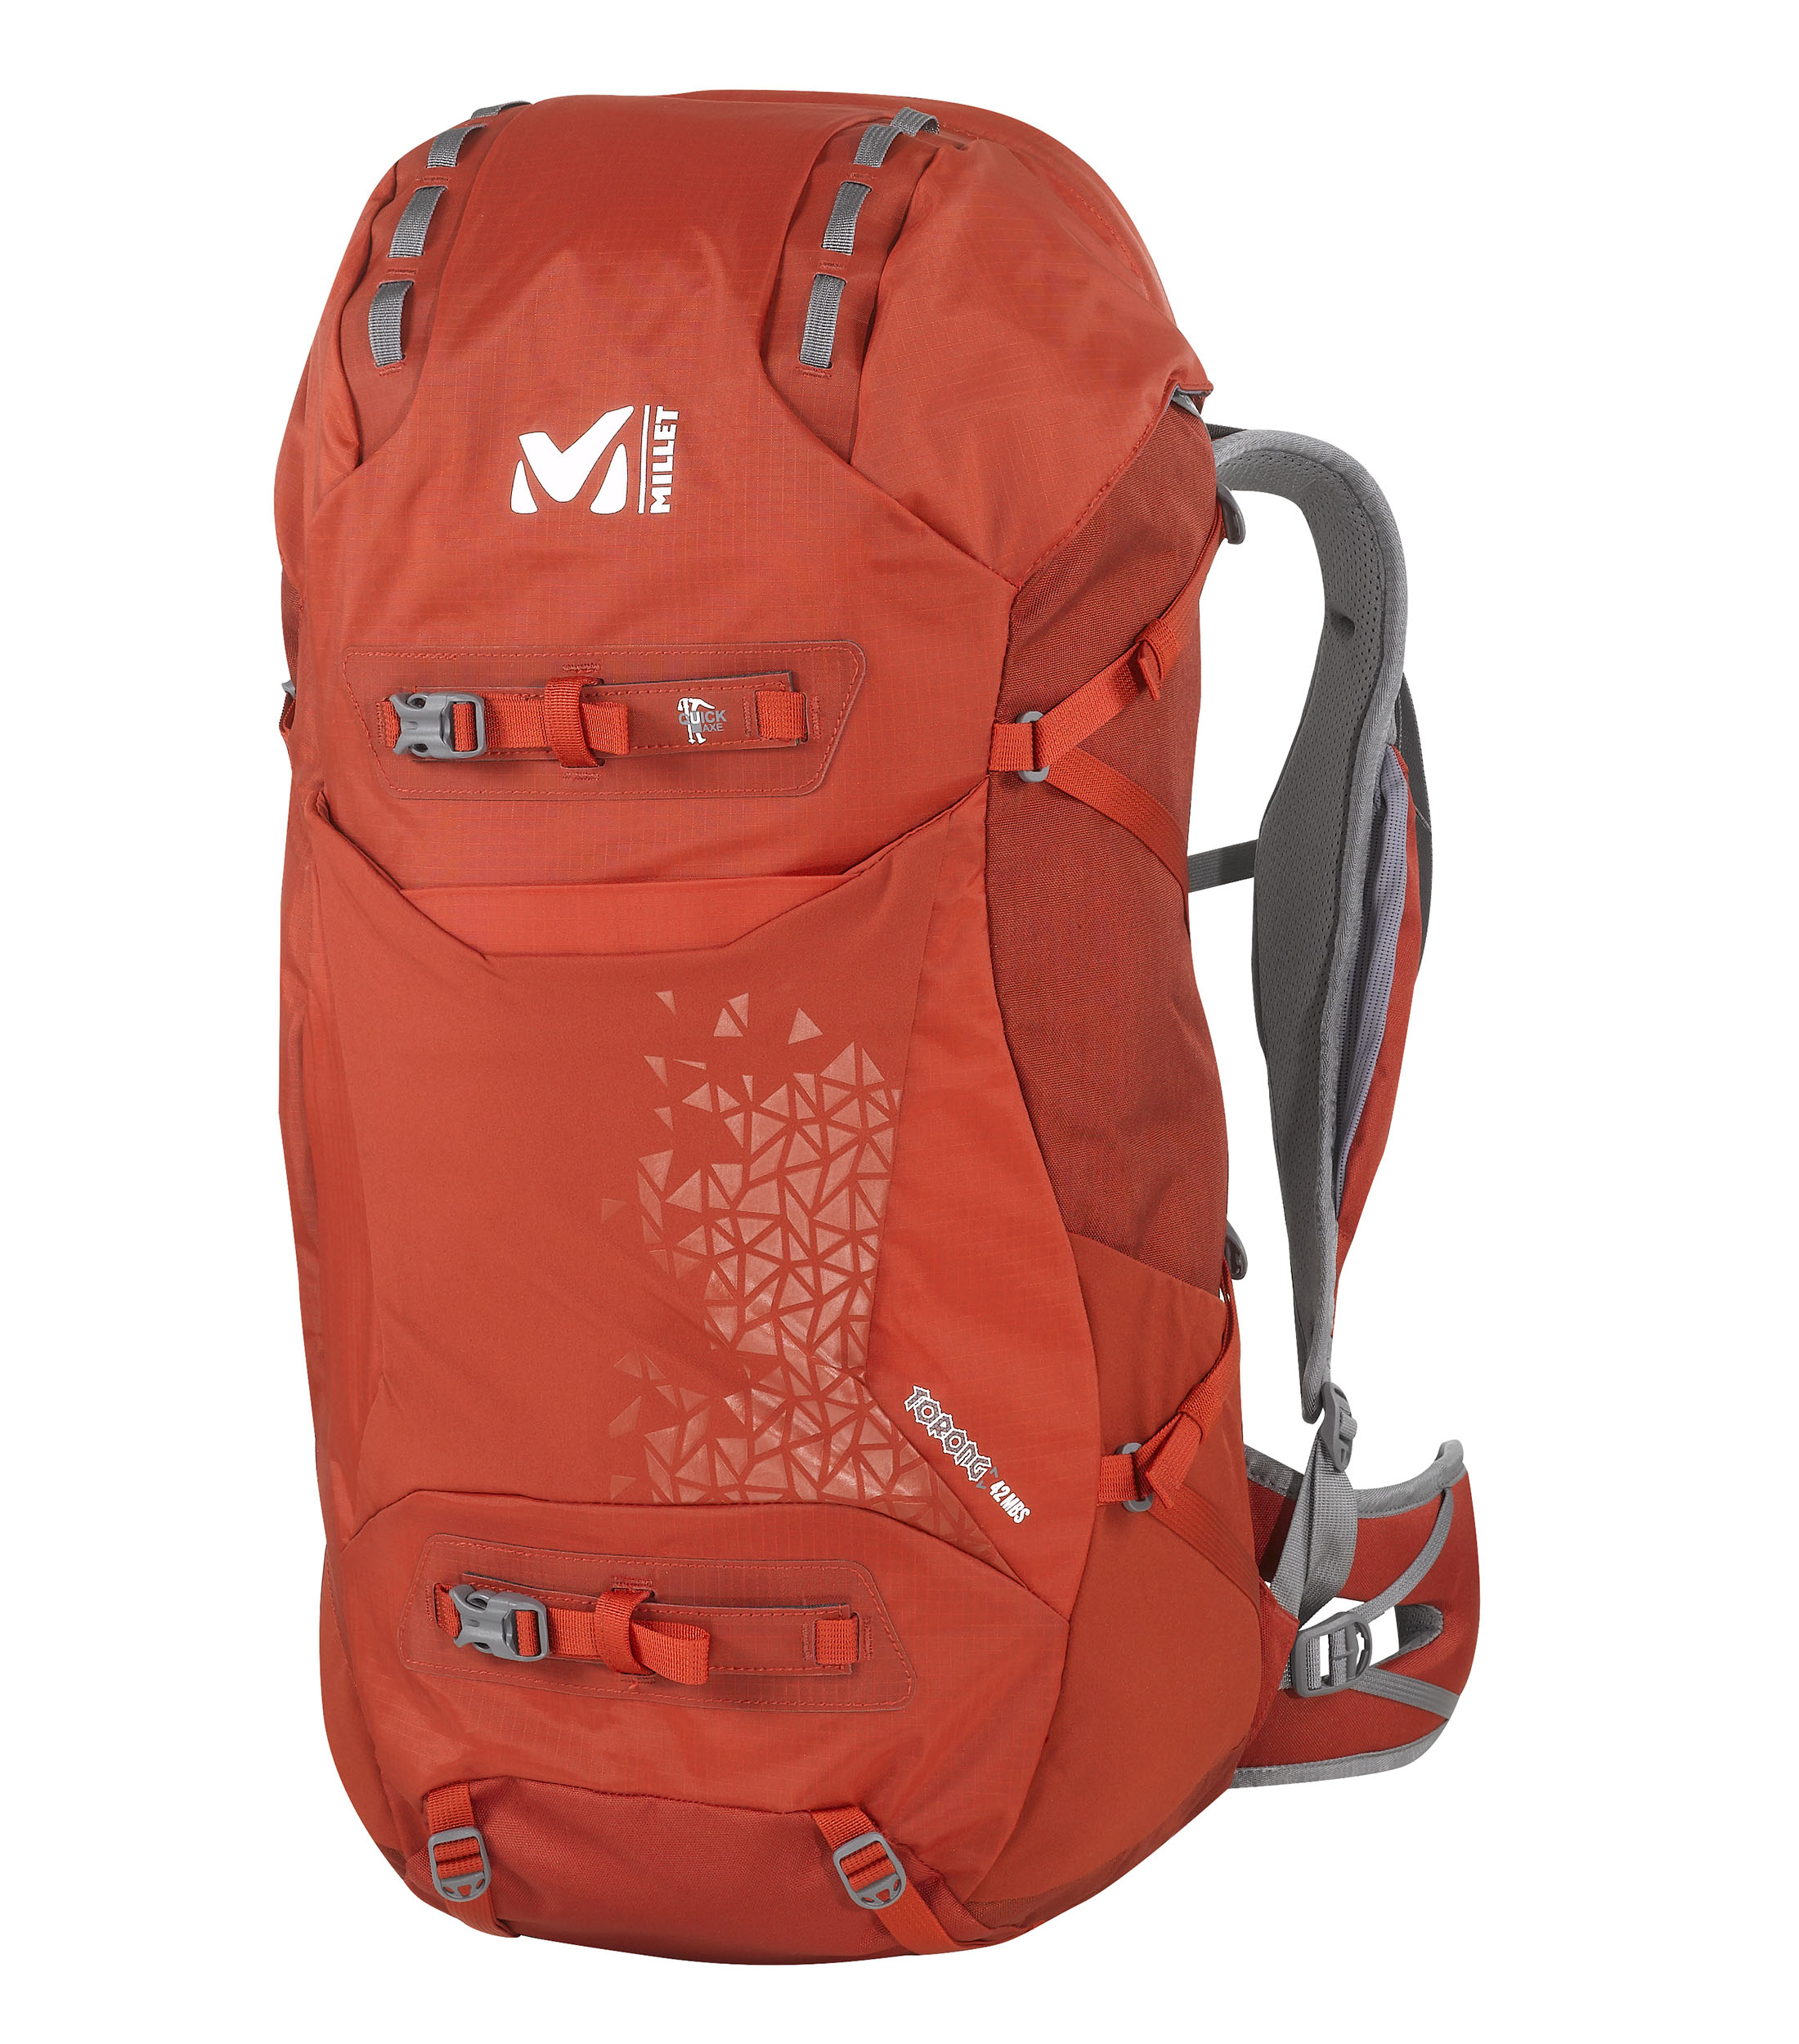 Mochila Torong MBS Backpack de Millet, ligera y capaz